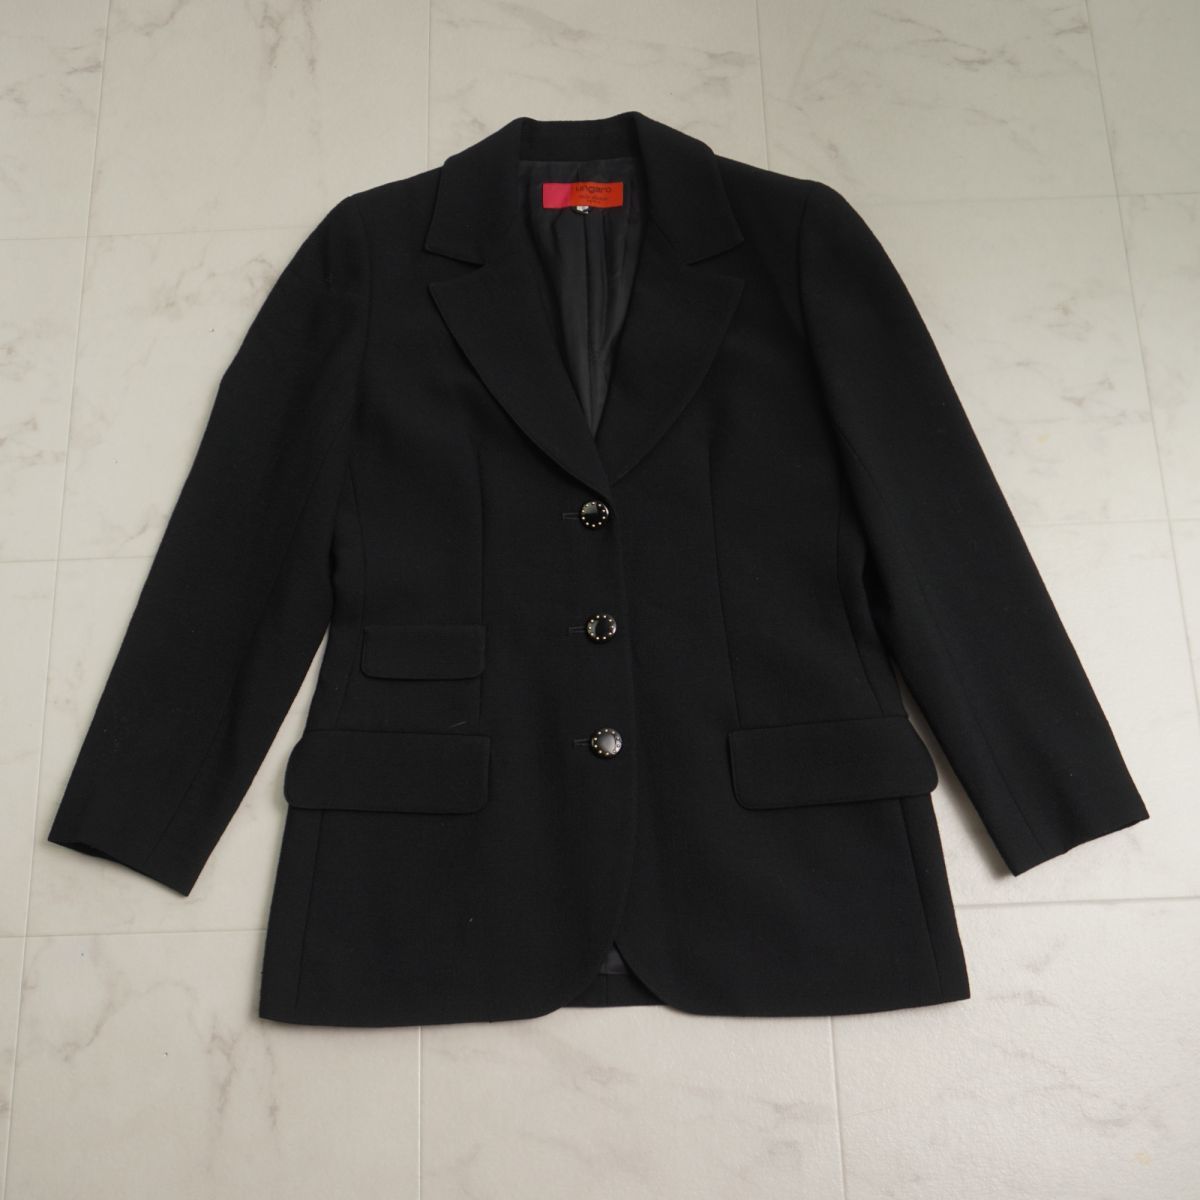 ungaro solo donna Ungaro Solo dana setup suit tailored jacket knees height skirt total reverse side lady's black black size 9*GC582